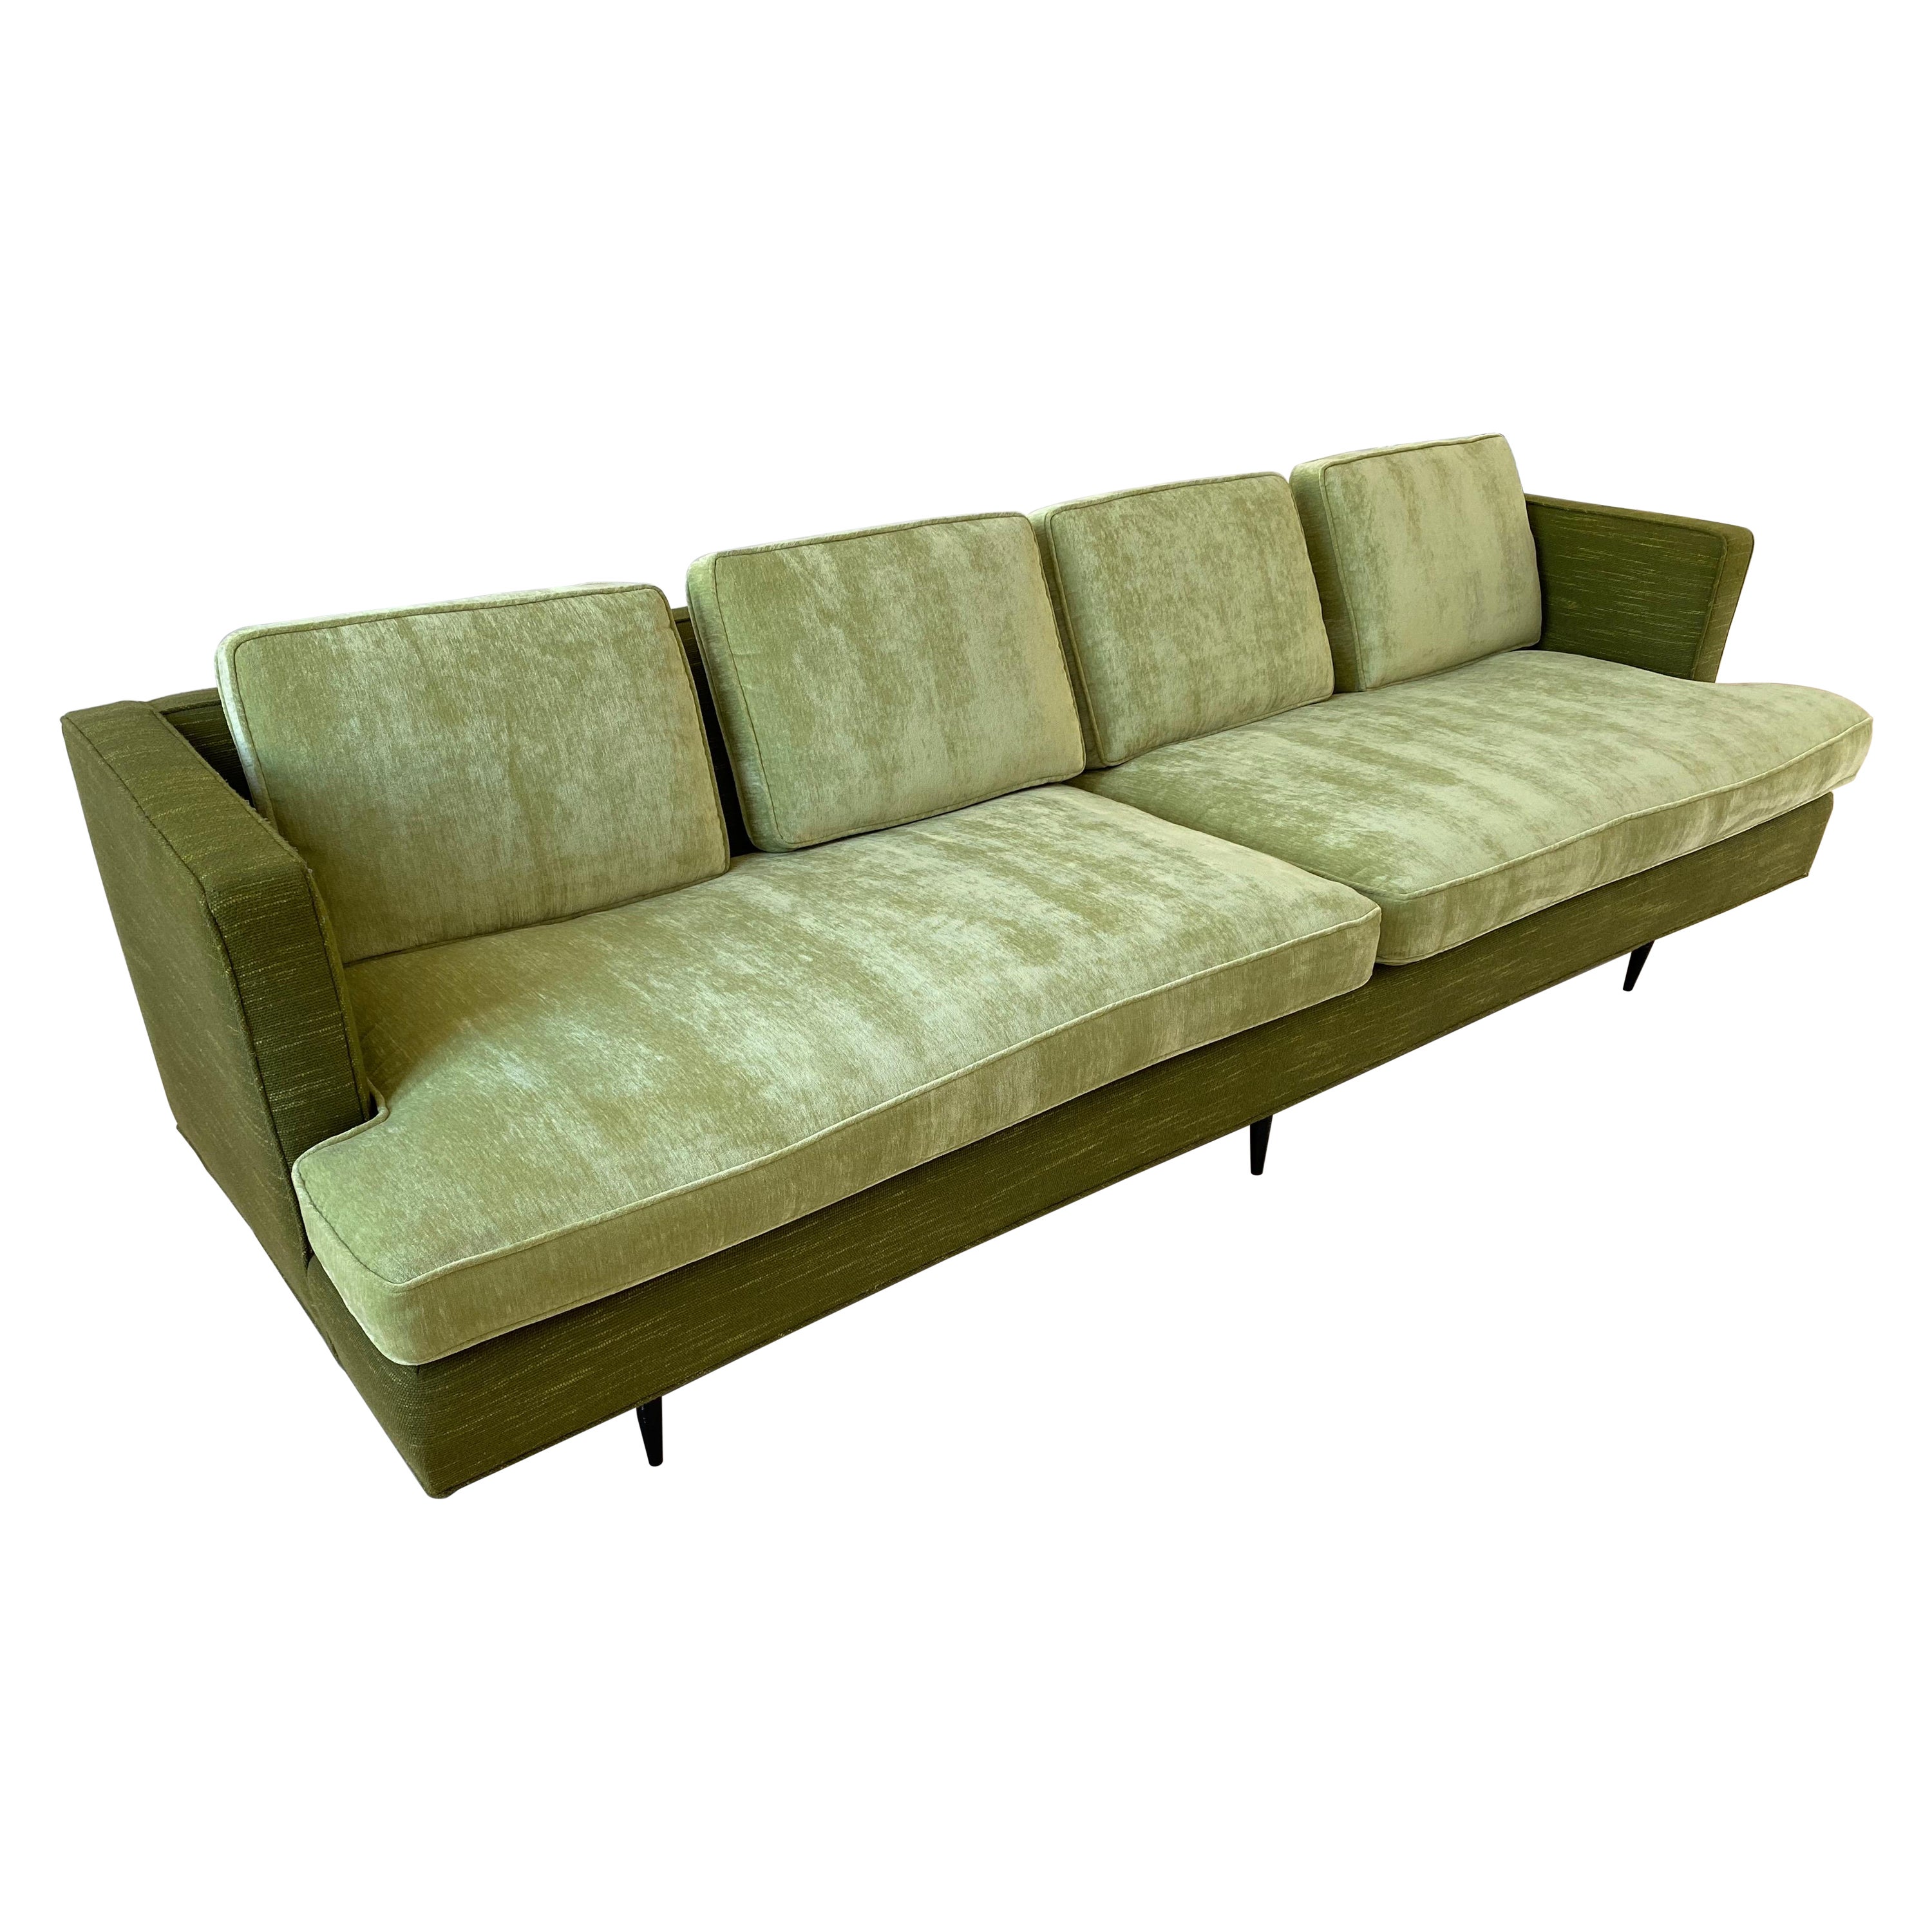 Even Arm Edward Wormley Style Sofa